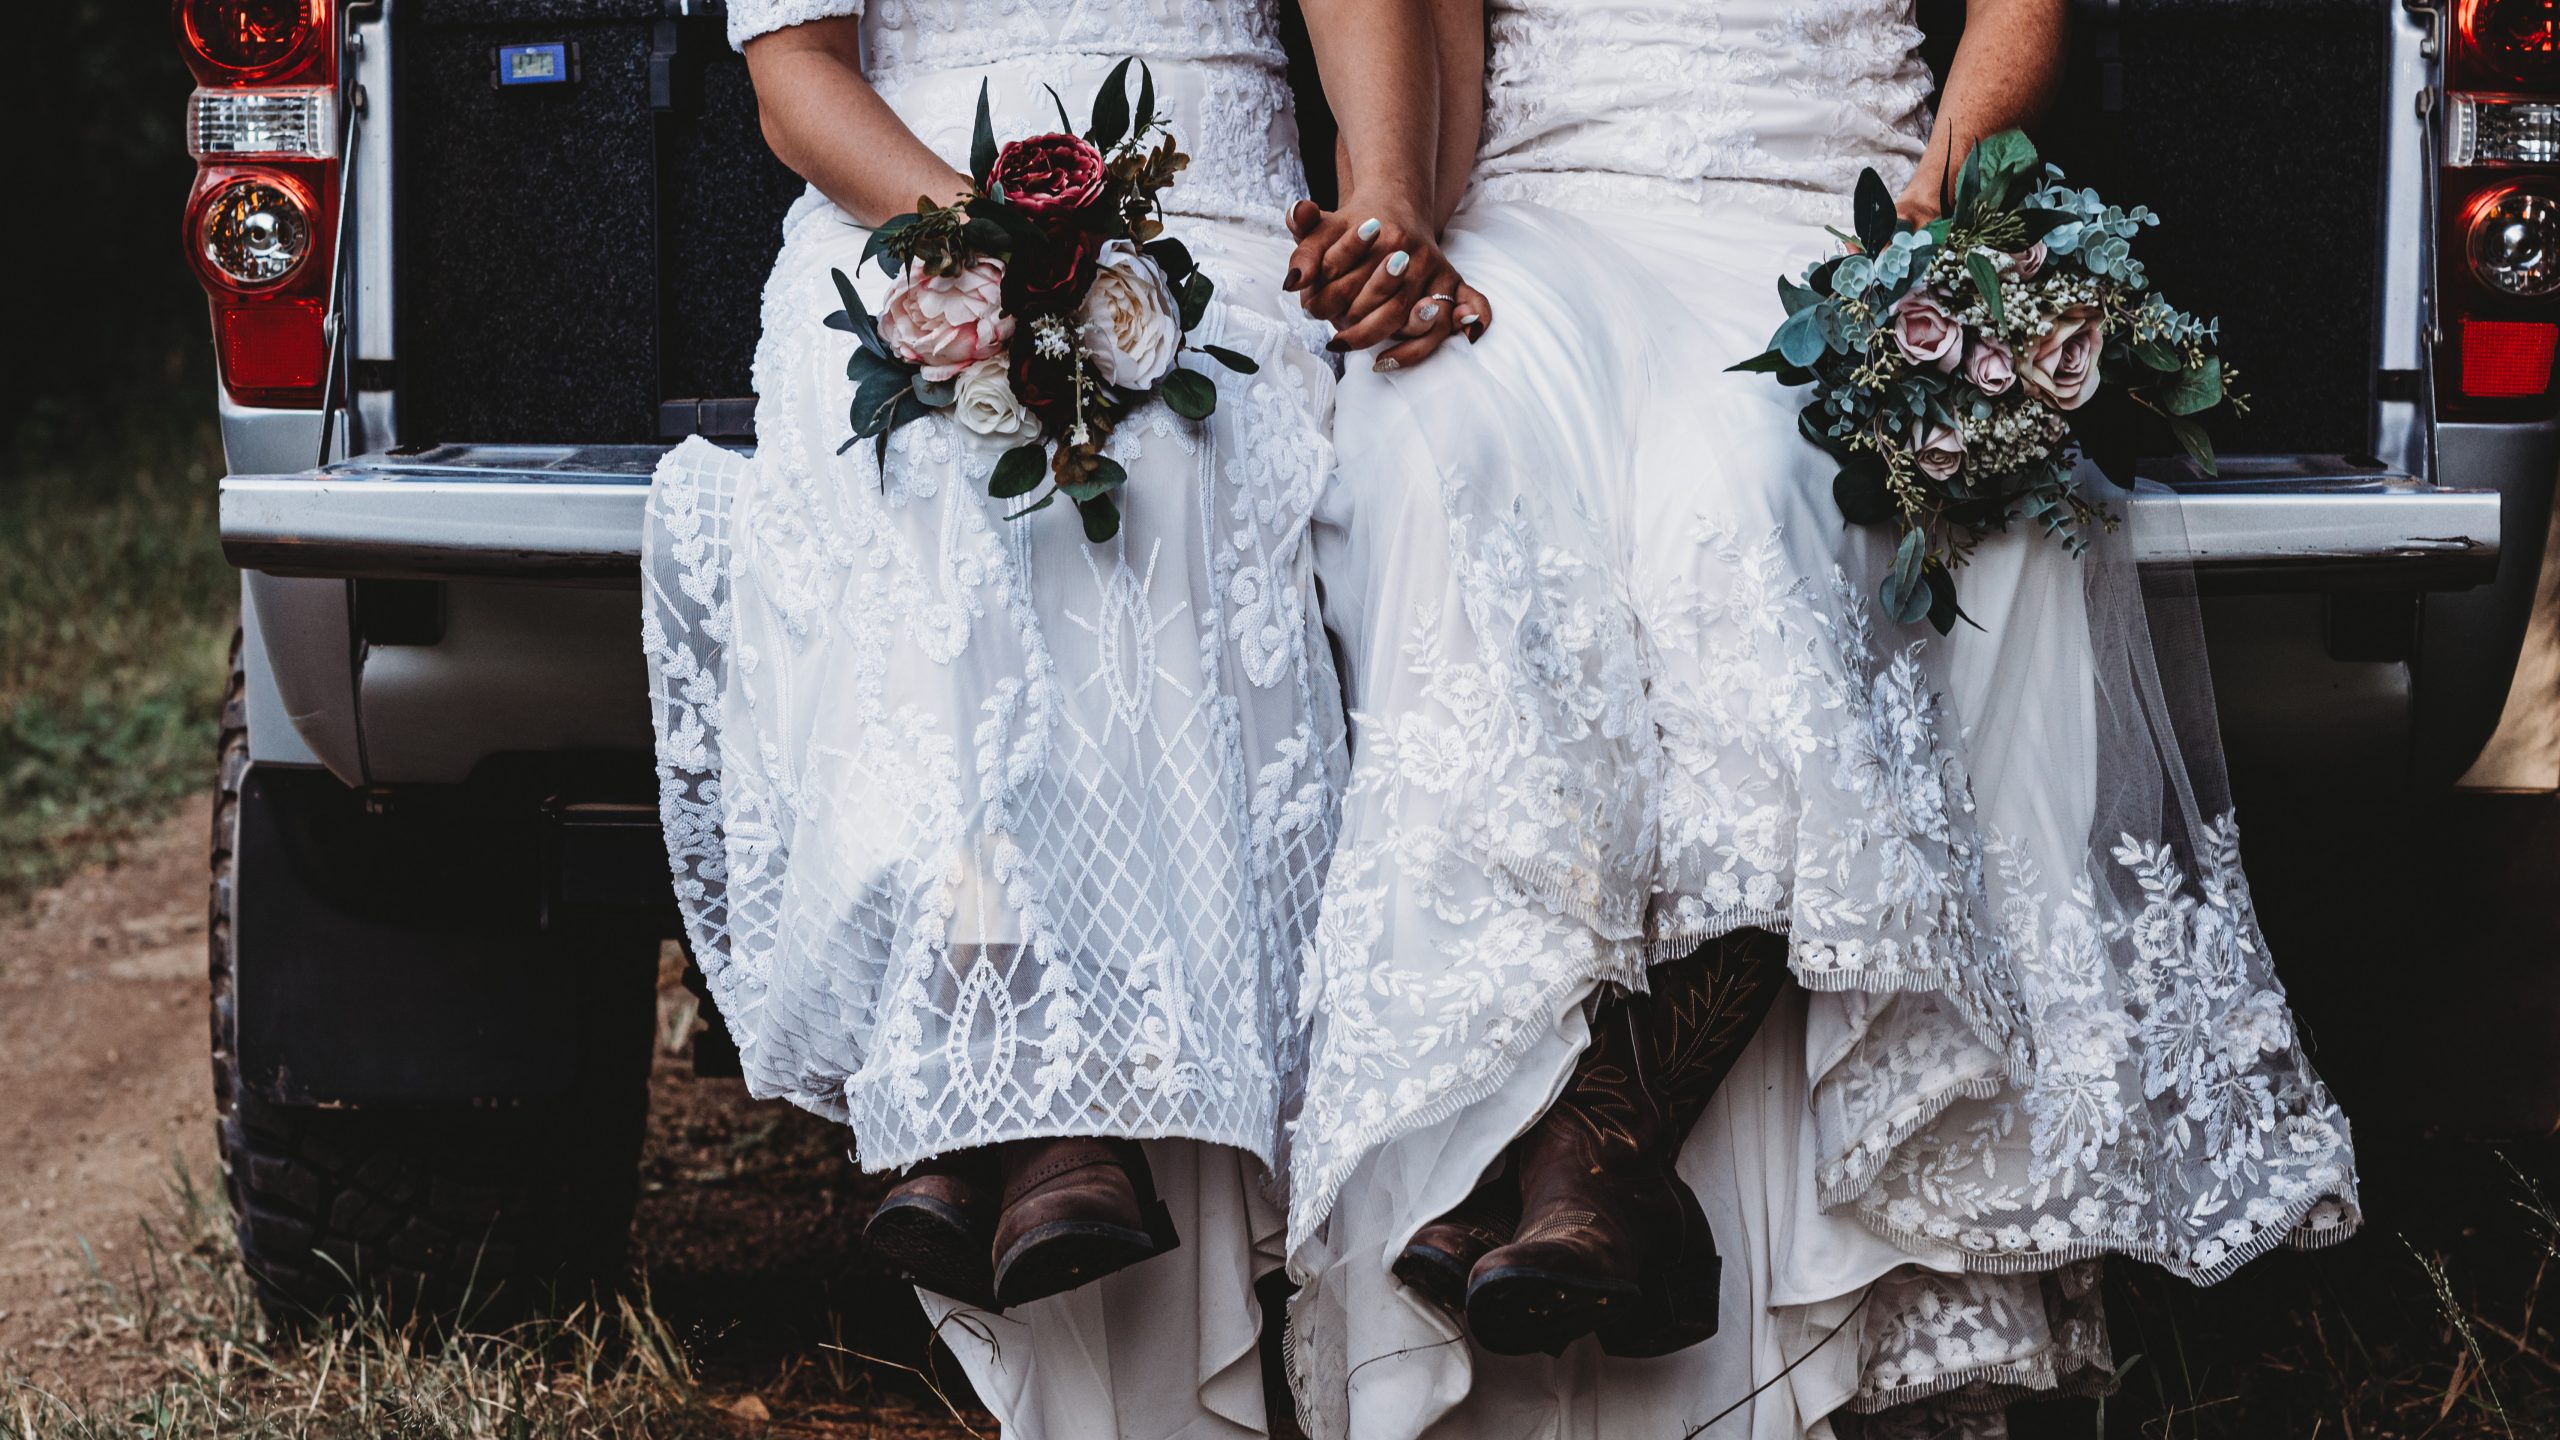 Virginia photographer can refuse same-sex weddings, says judge